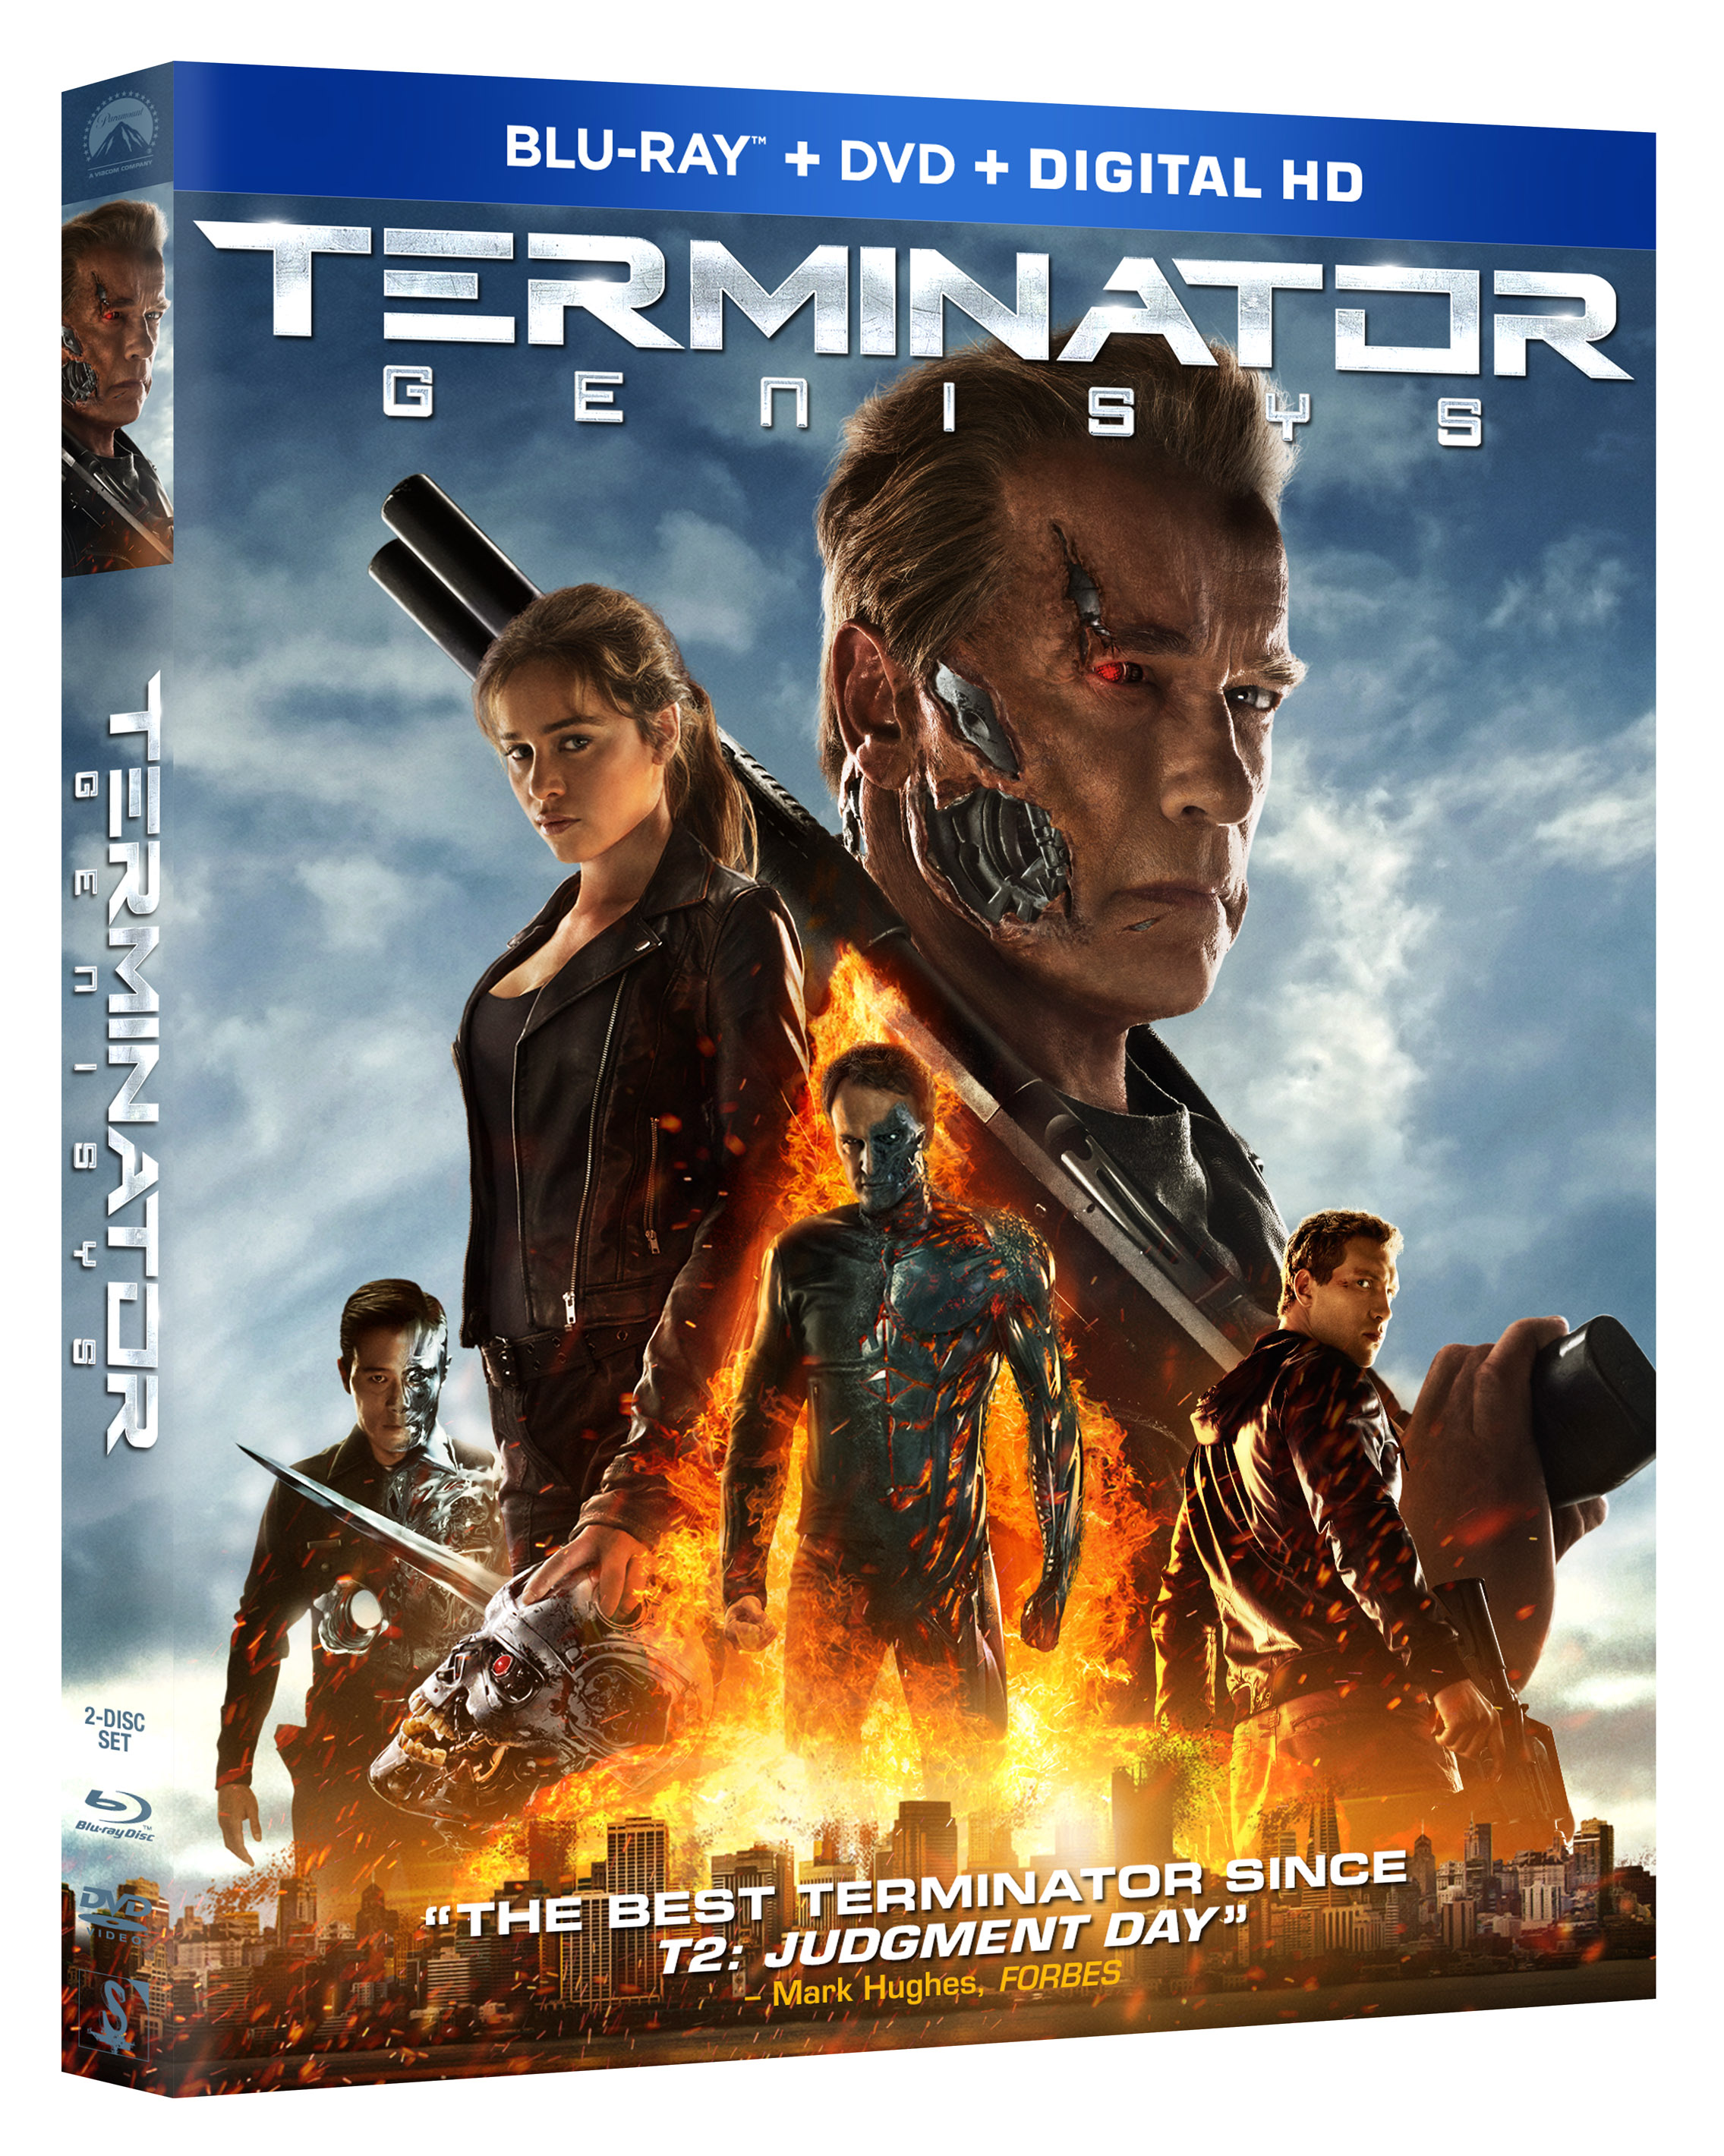 Terminator Genisys Blu-ray Review